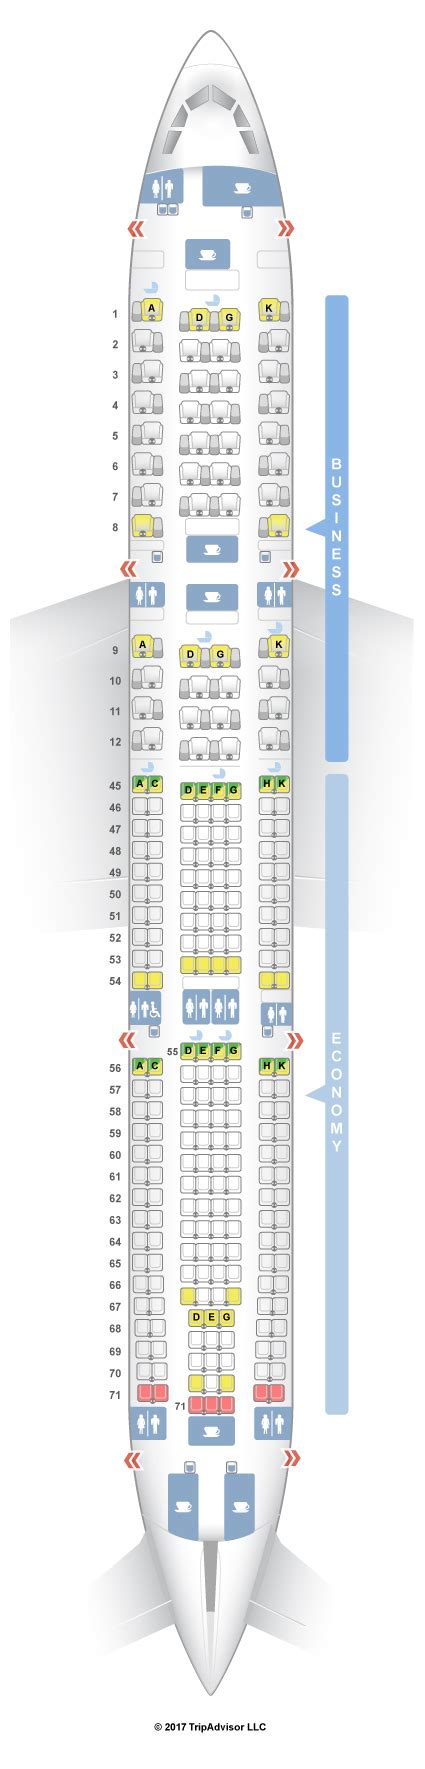 Seatguru Seat Map South African Airways Airbus A330 300 333 Seatguru